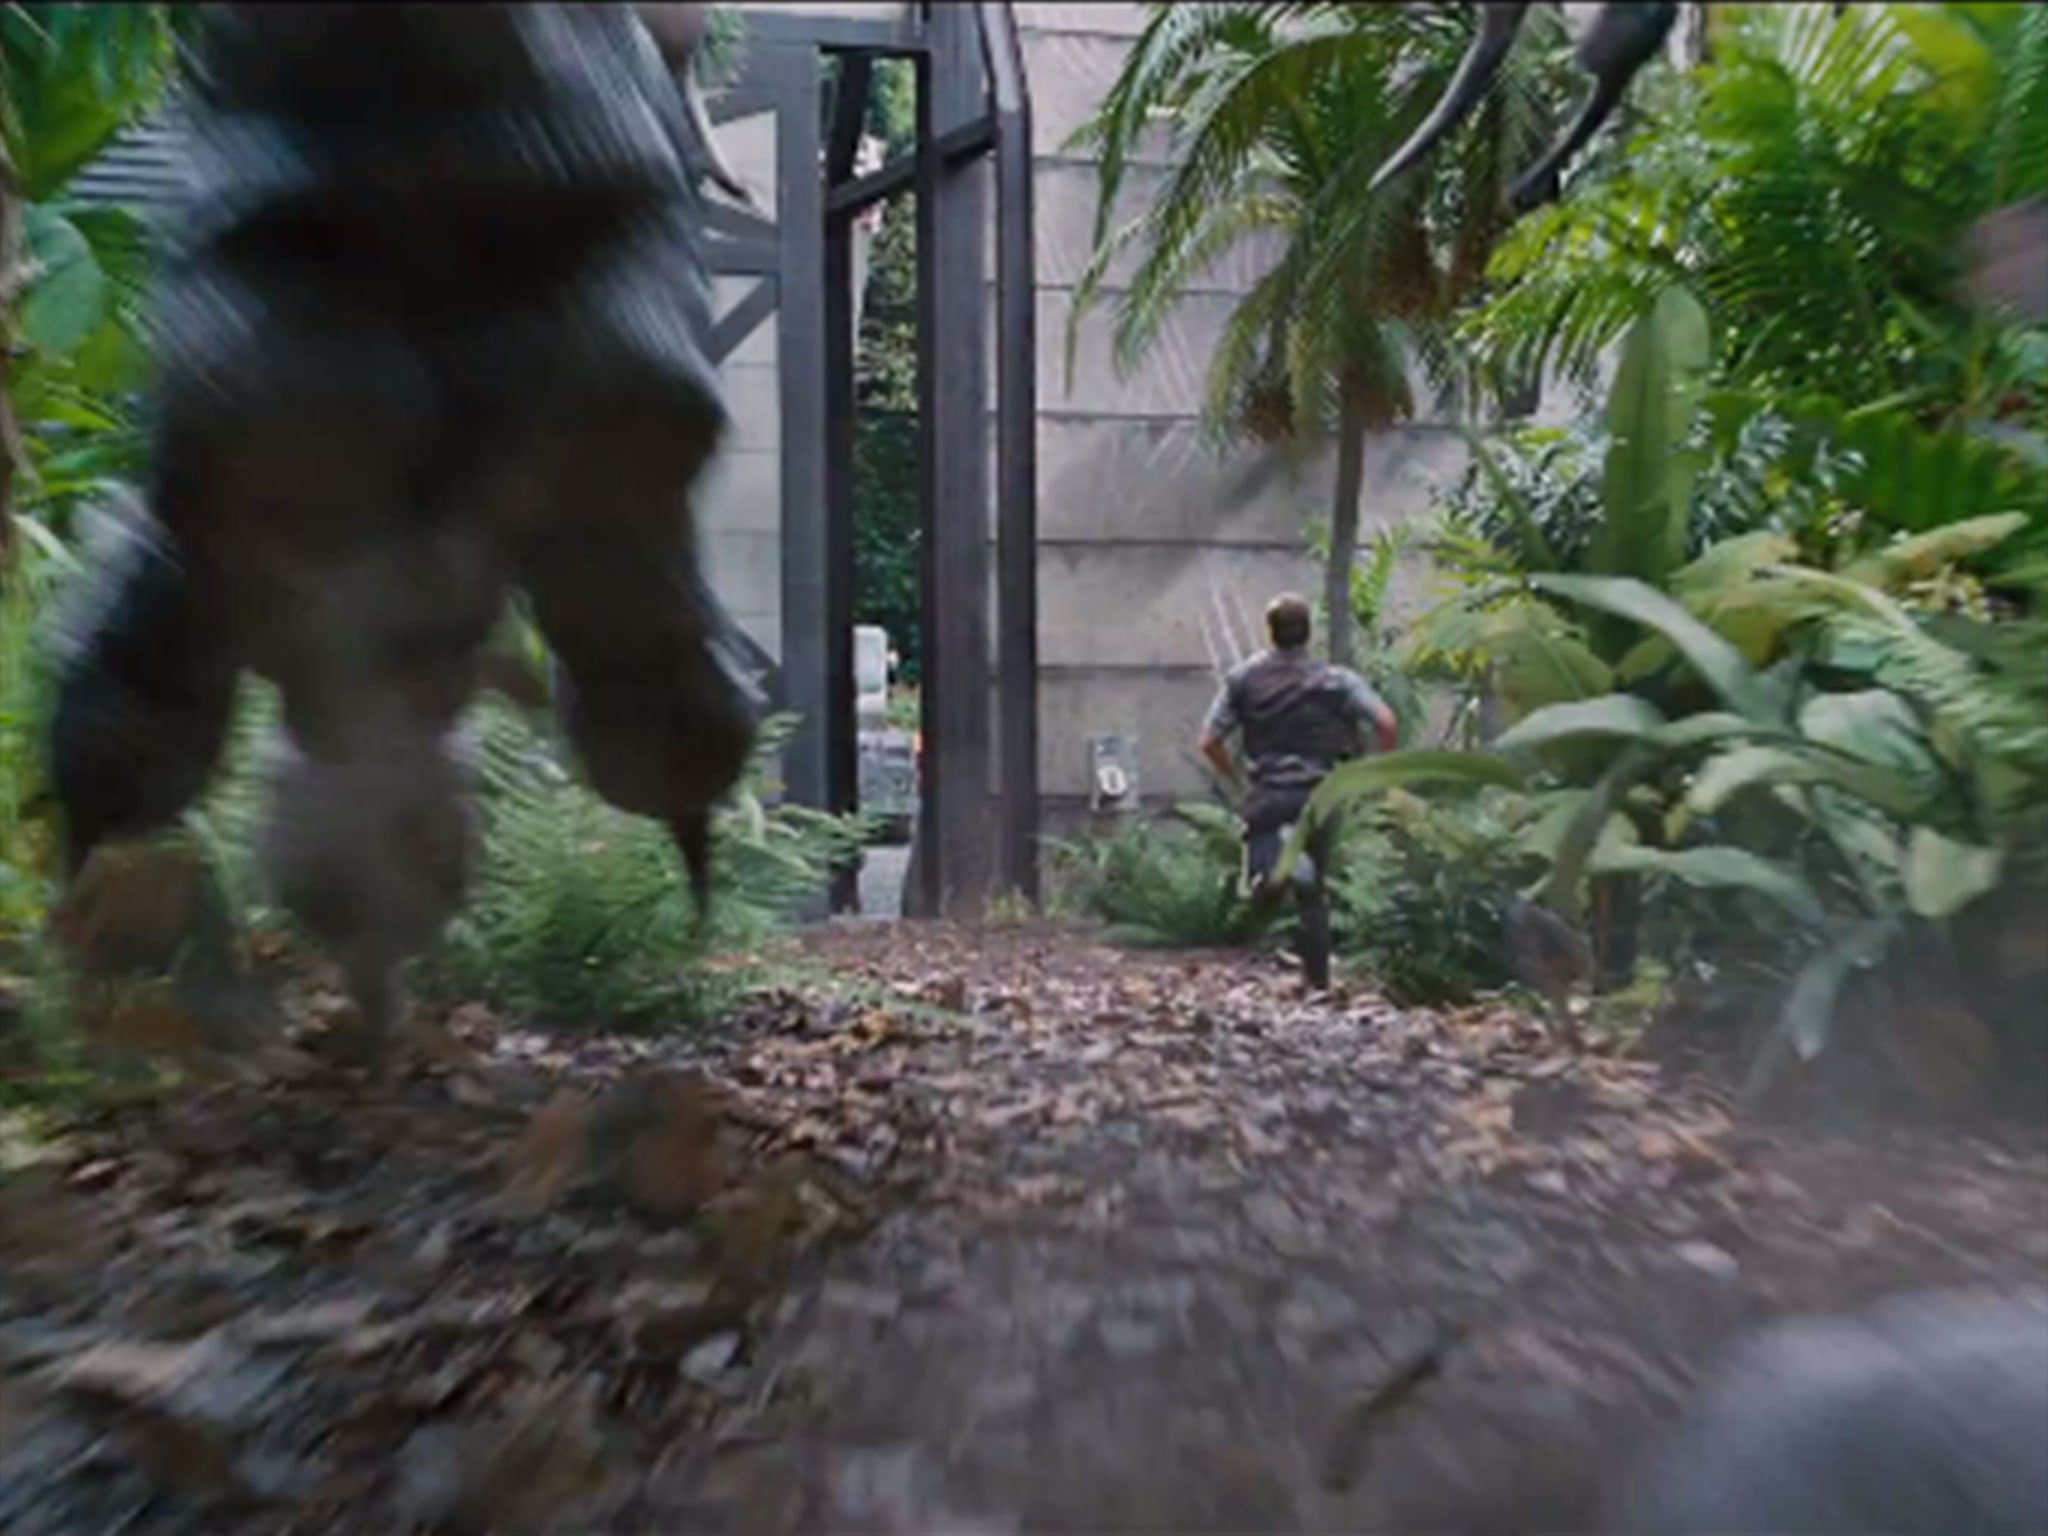 A still from the Jurassic World trailer